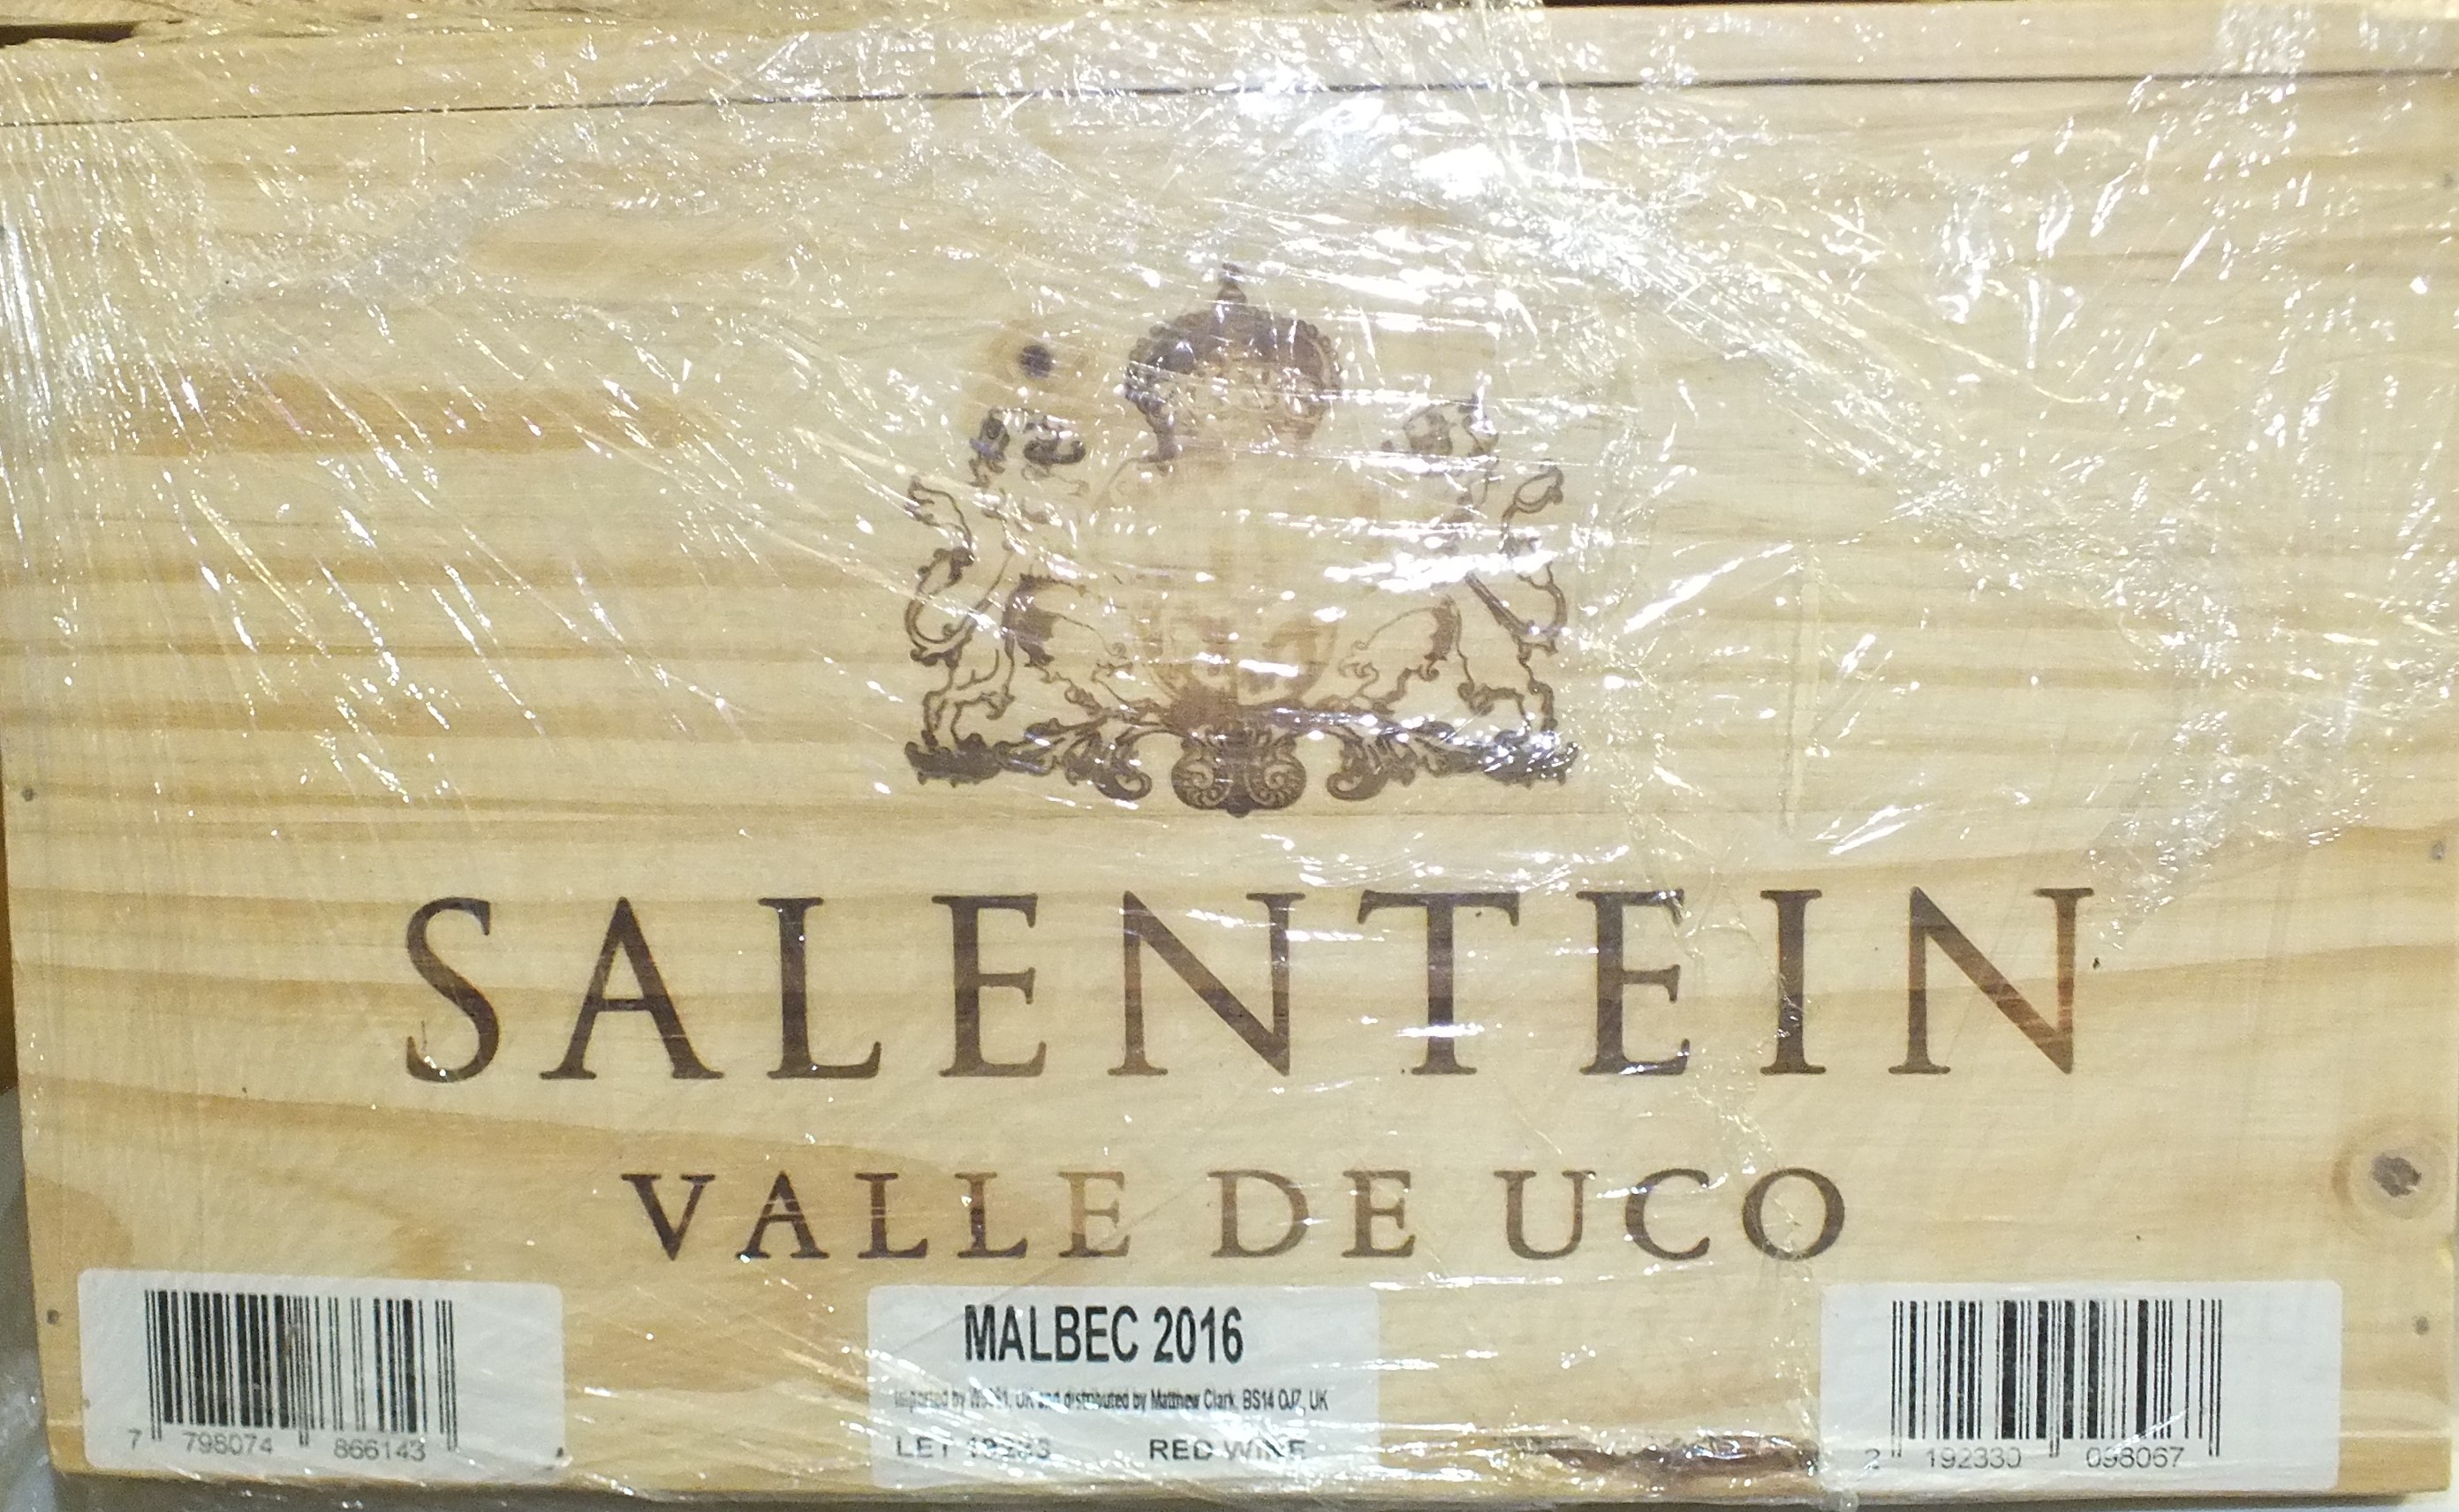 Salentein Valle de Luco, Primus Malbec 2016, six bottles in original wooden crate, (6).